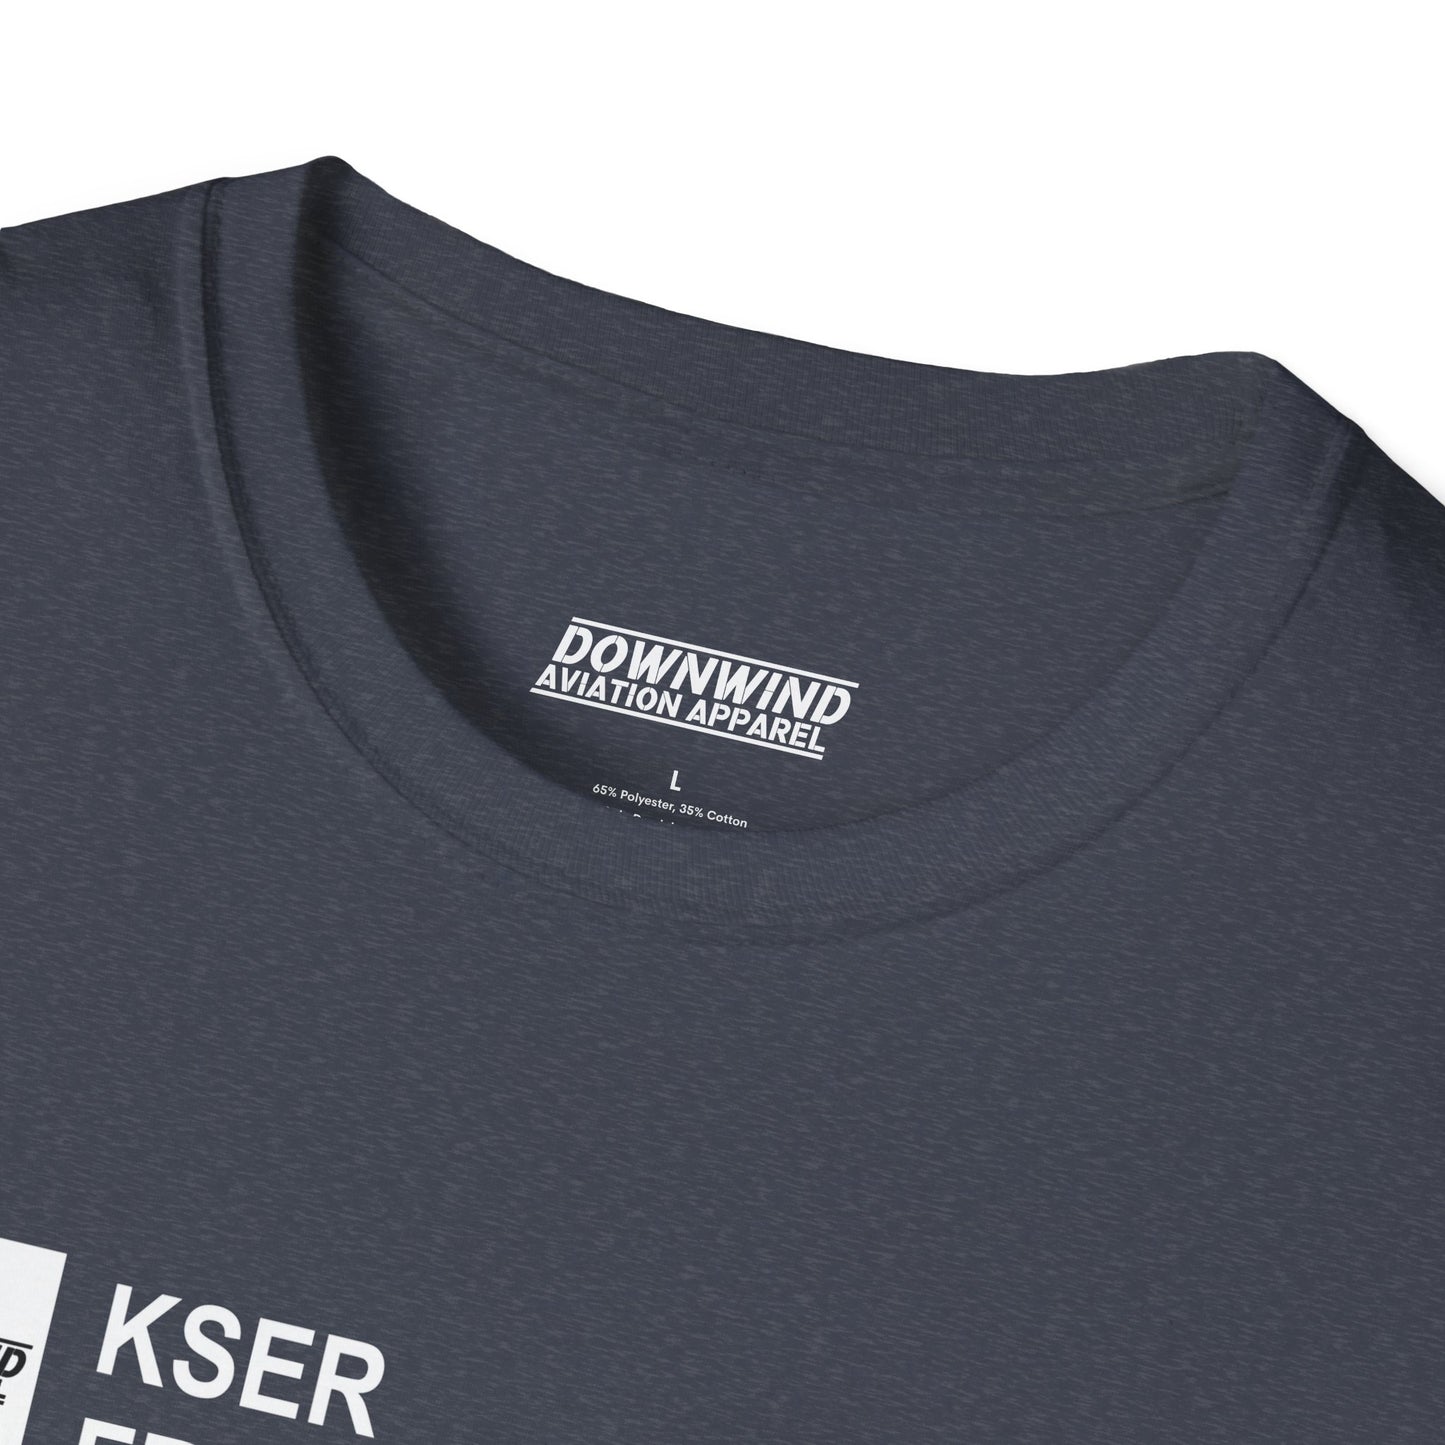 KSER / Freeman Muni. T-Shirt